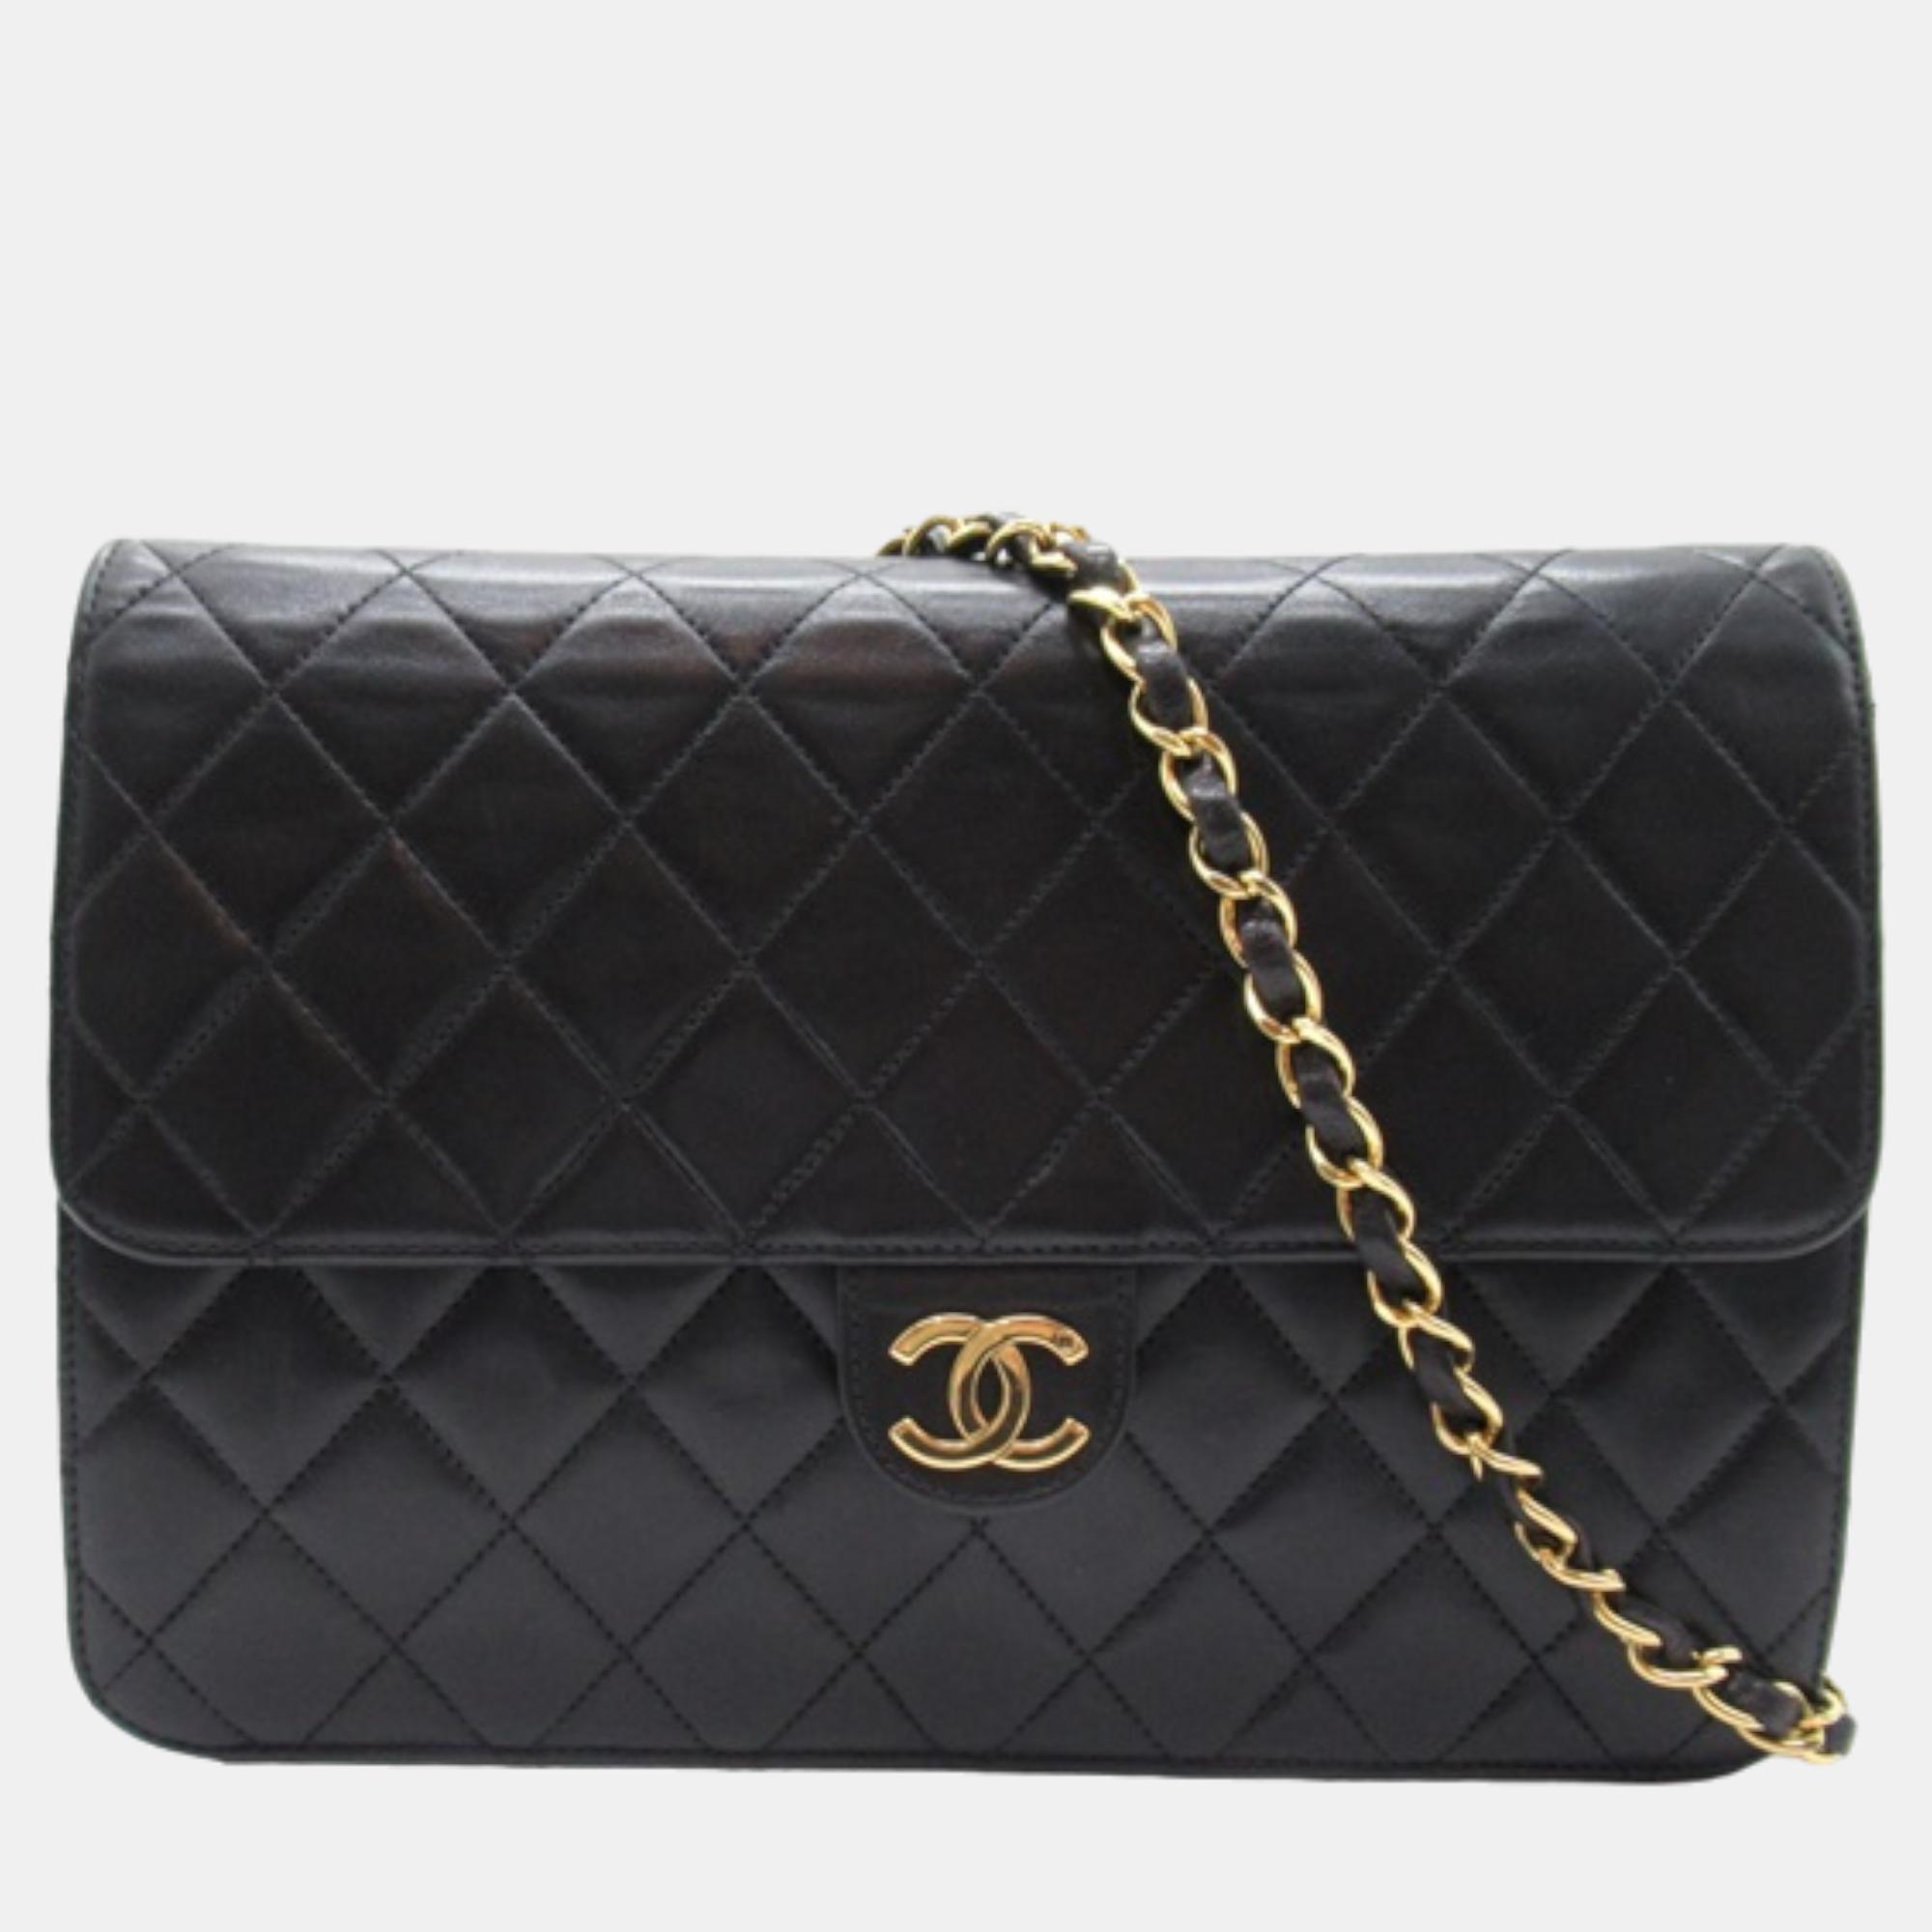 Chanel black leather medium classic single flap bag